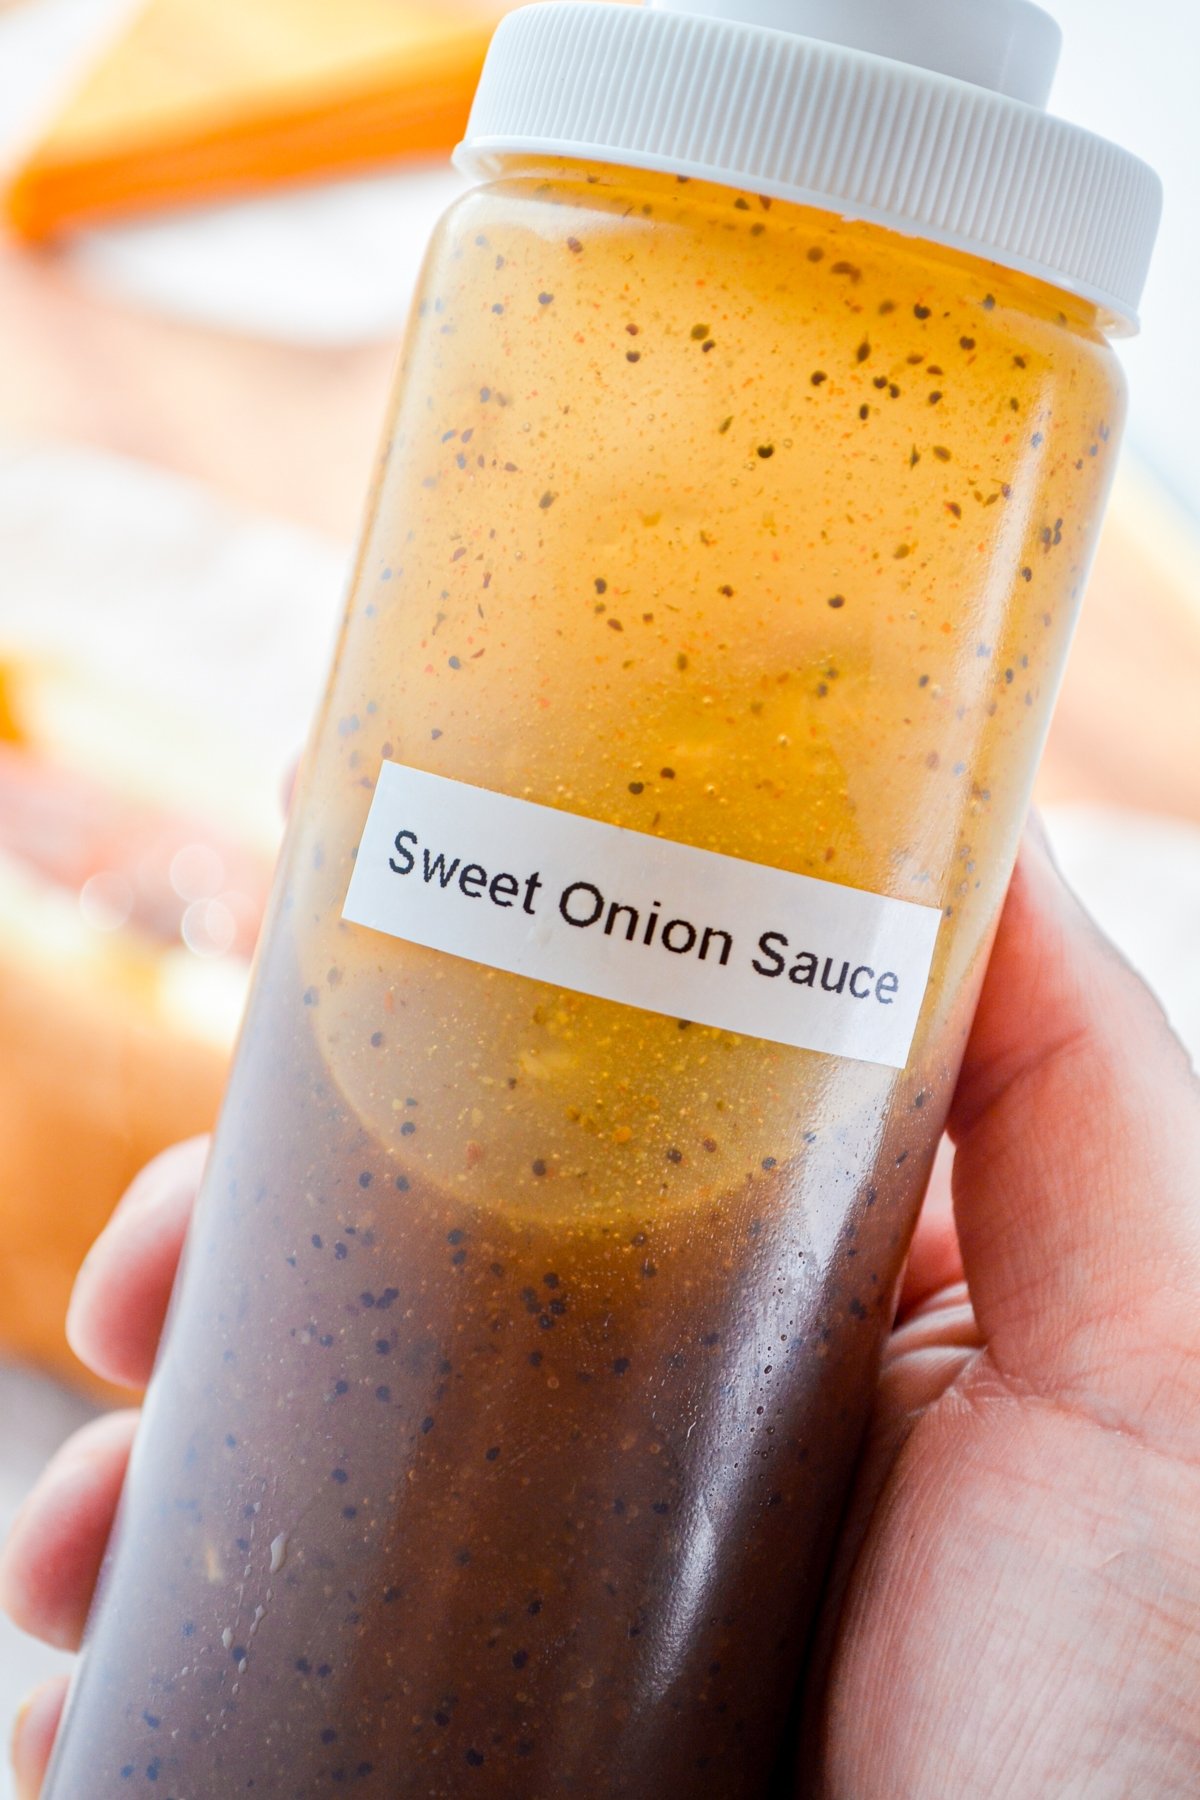 A bottle of homemade Sweet Onion Sauce.